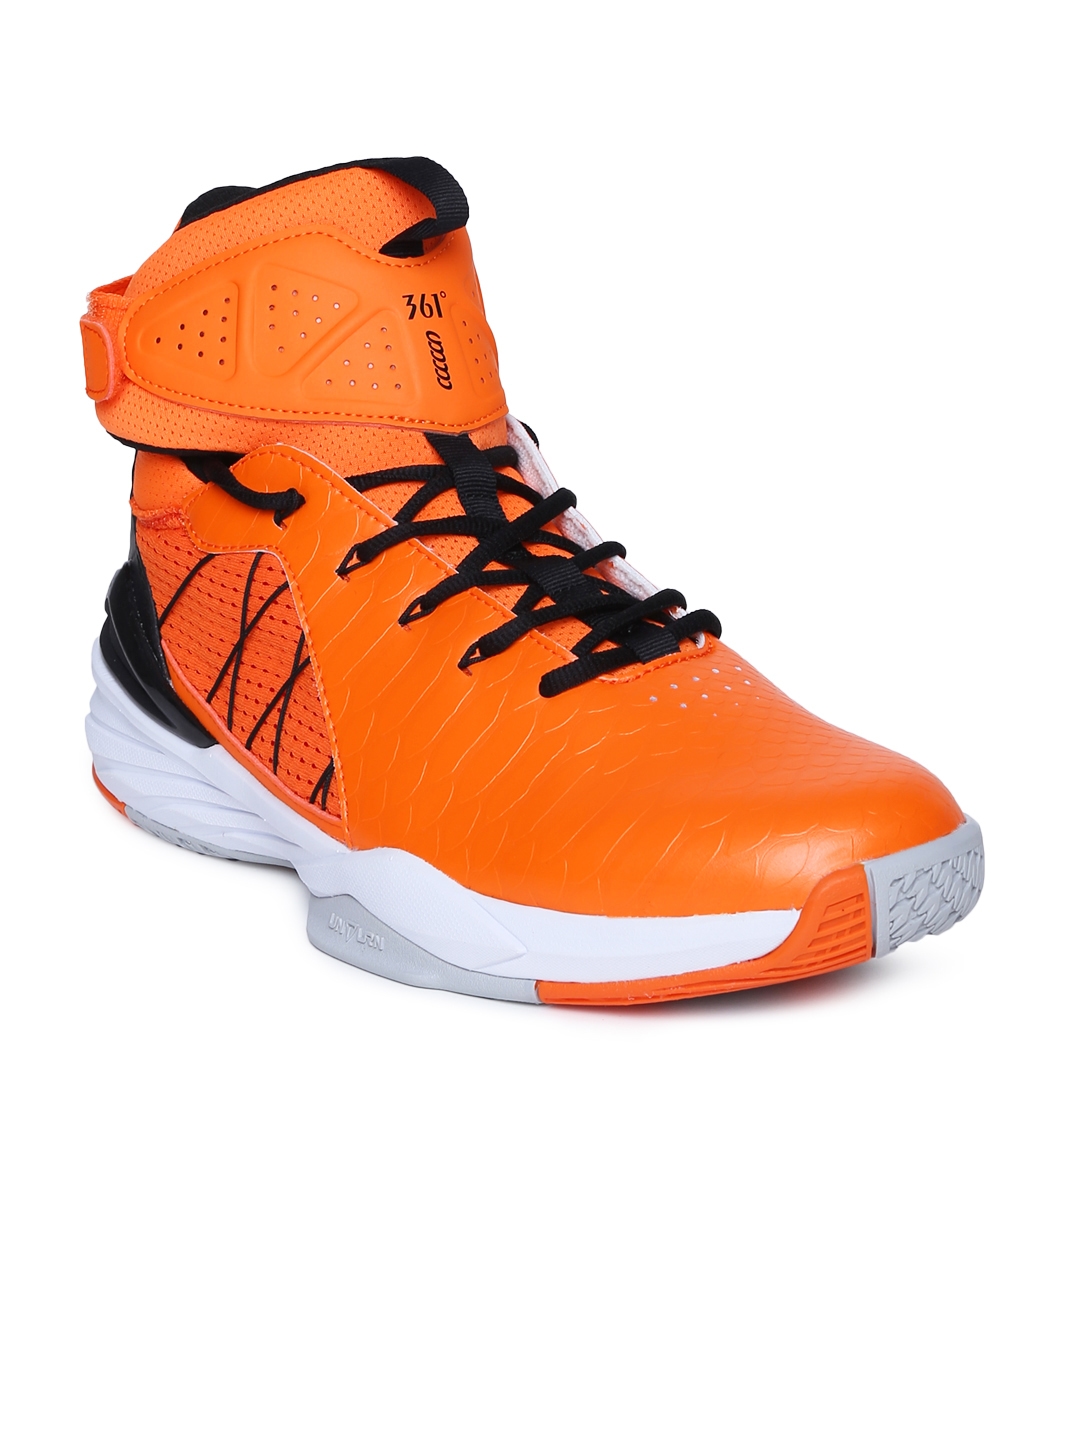 all orange basketball shoes